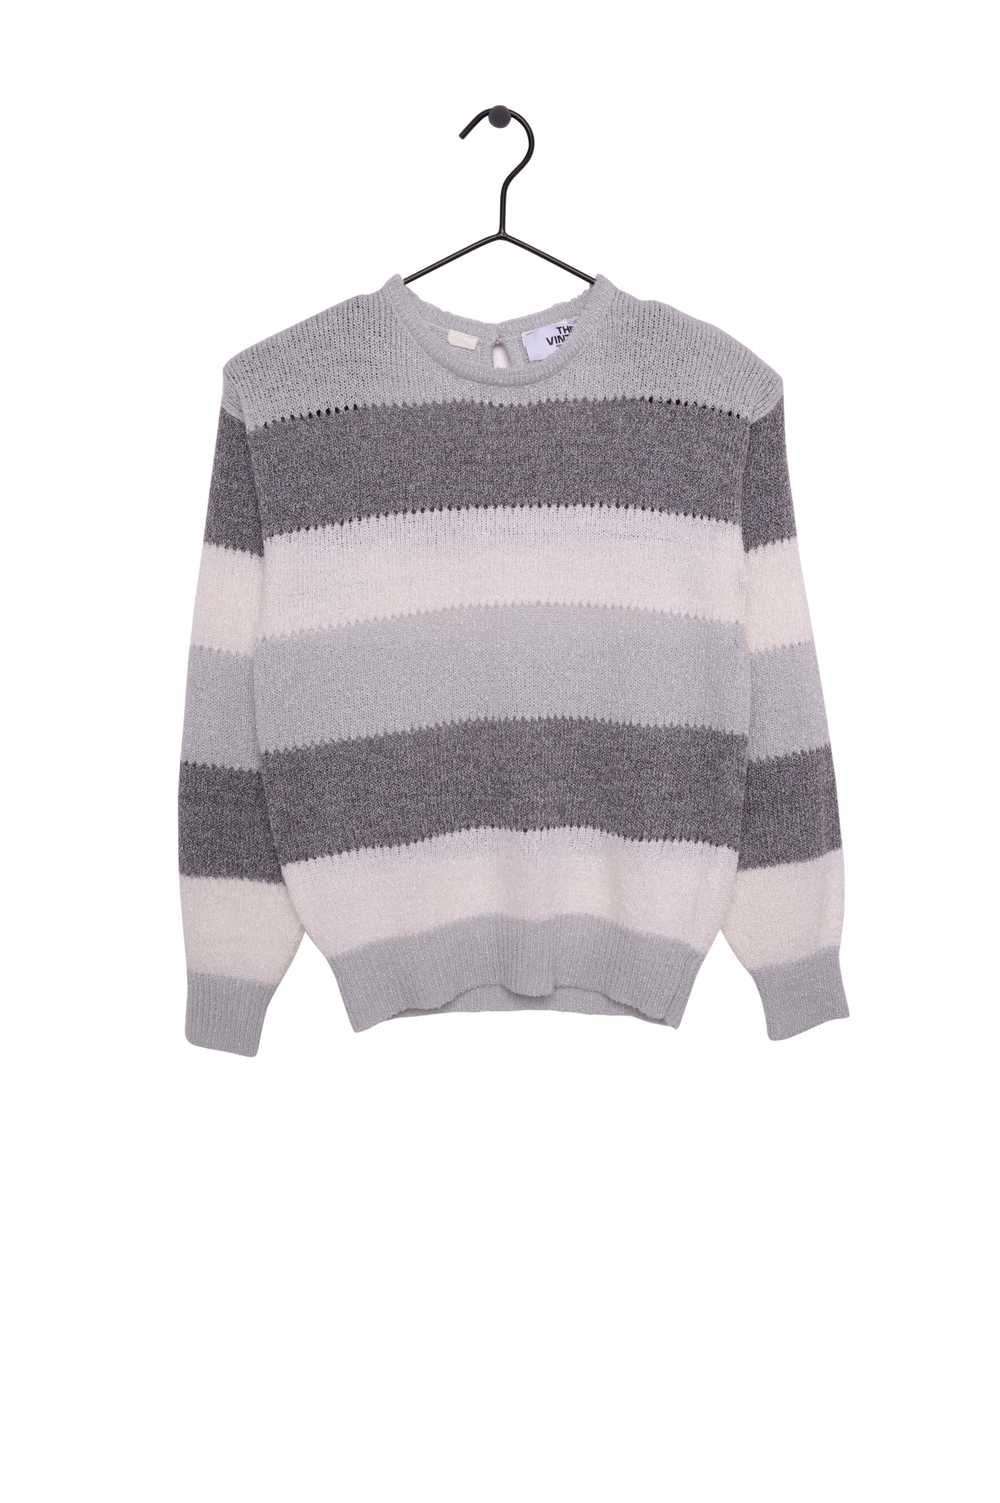 1980s Grayscale Stripe Sweater - image 1